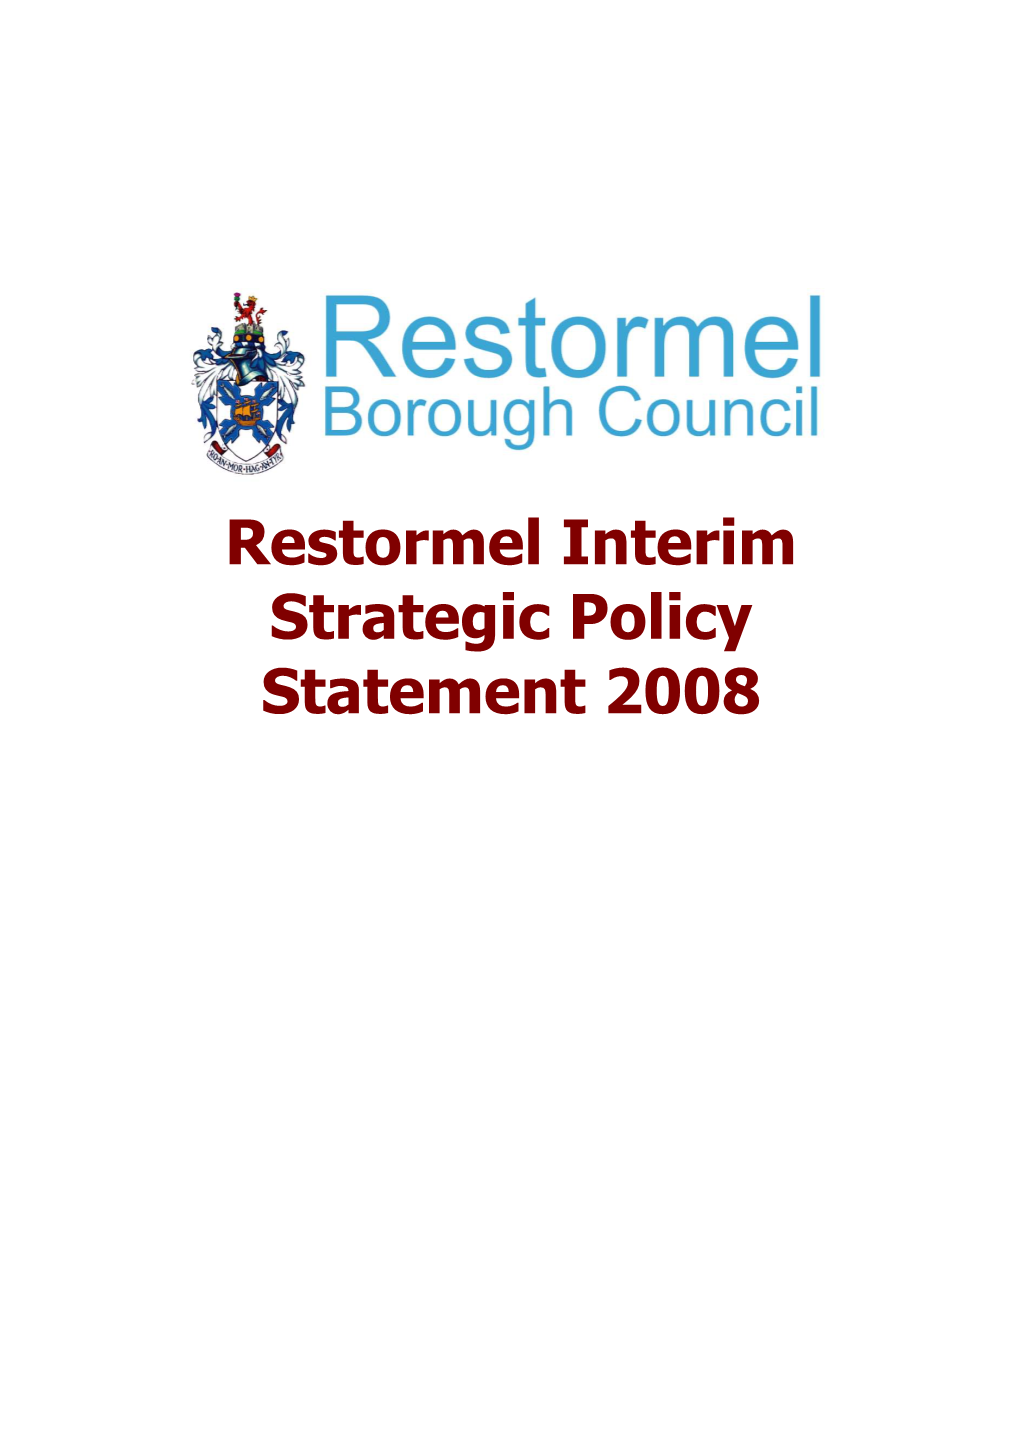 Restormel Borough Council for New Development in the Area